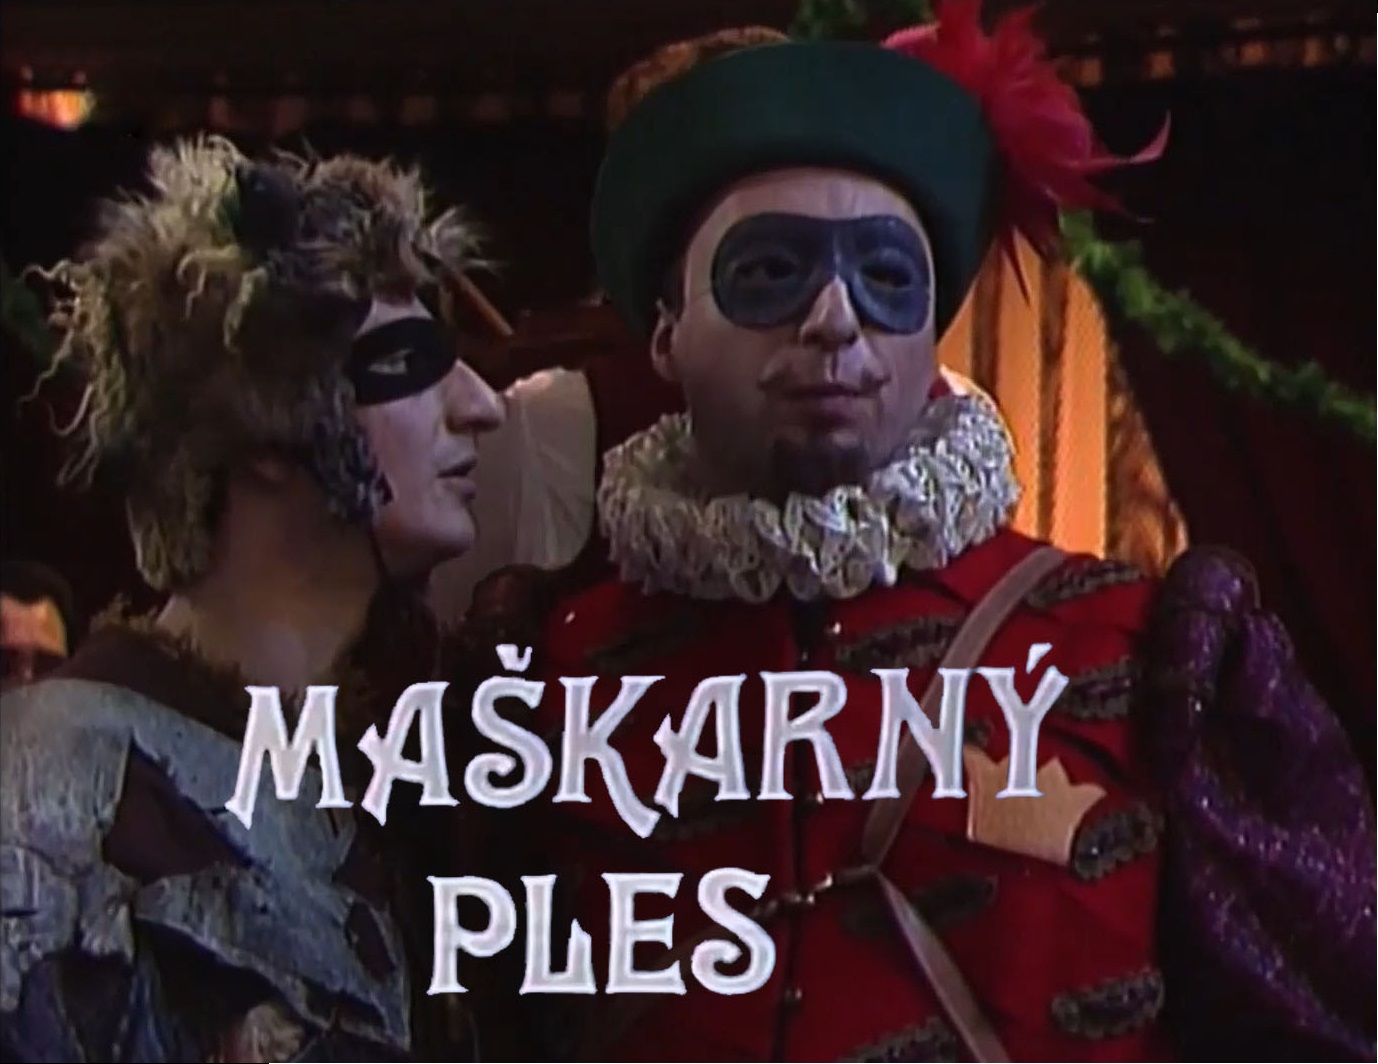 Stiahni si Filmy CZ/SK dabing Maskarny ples (1989)(SK)[TvRip] = CSFD 68%